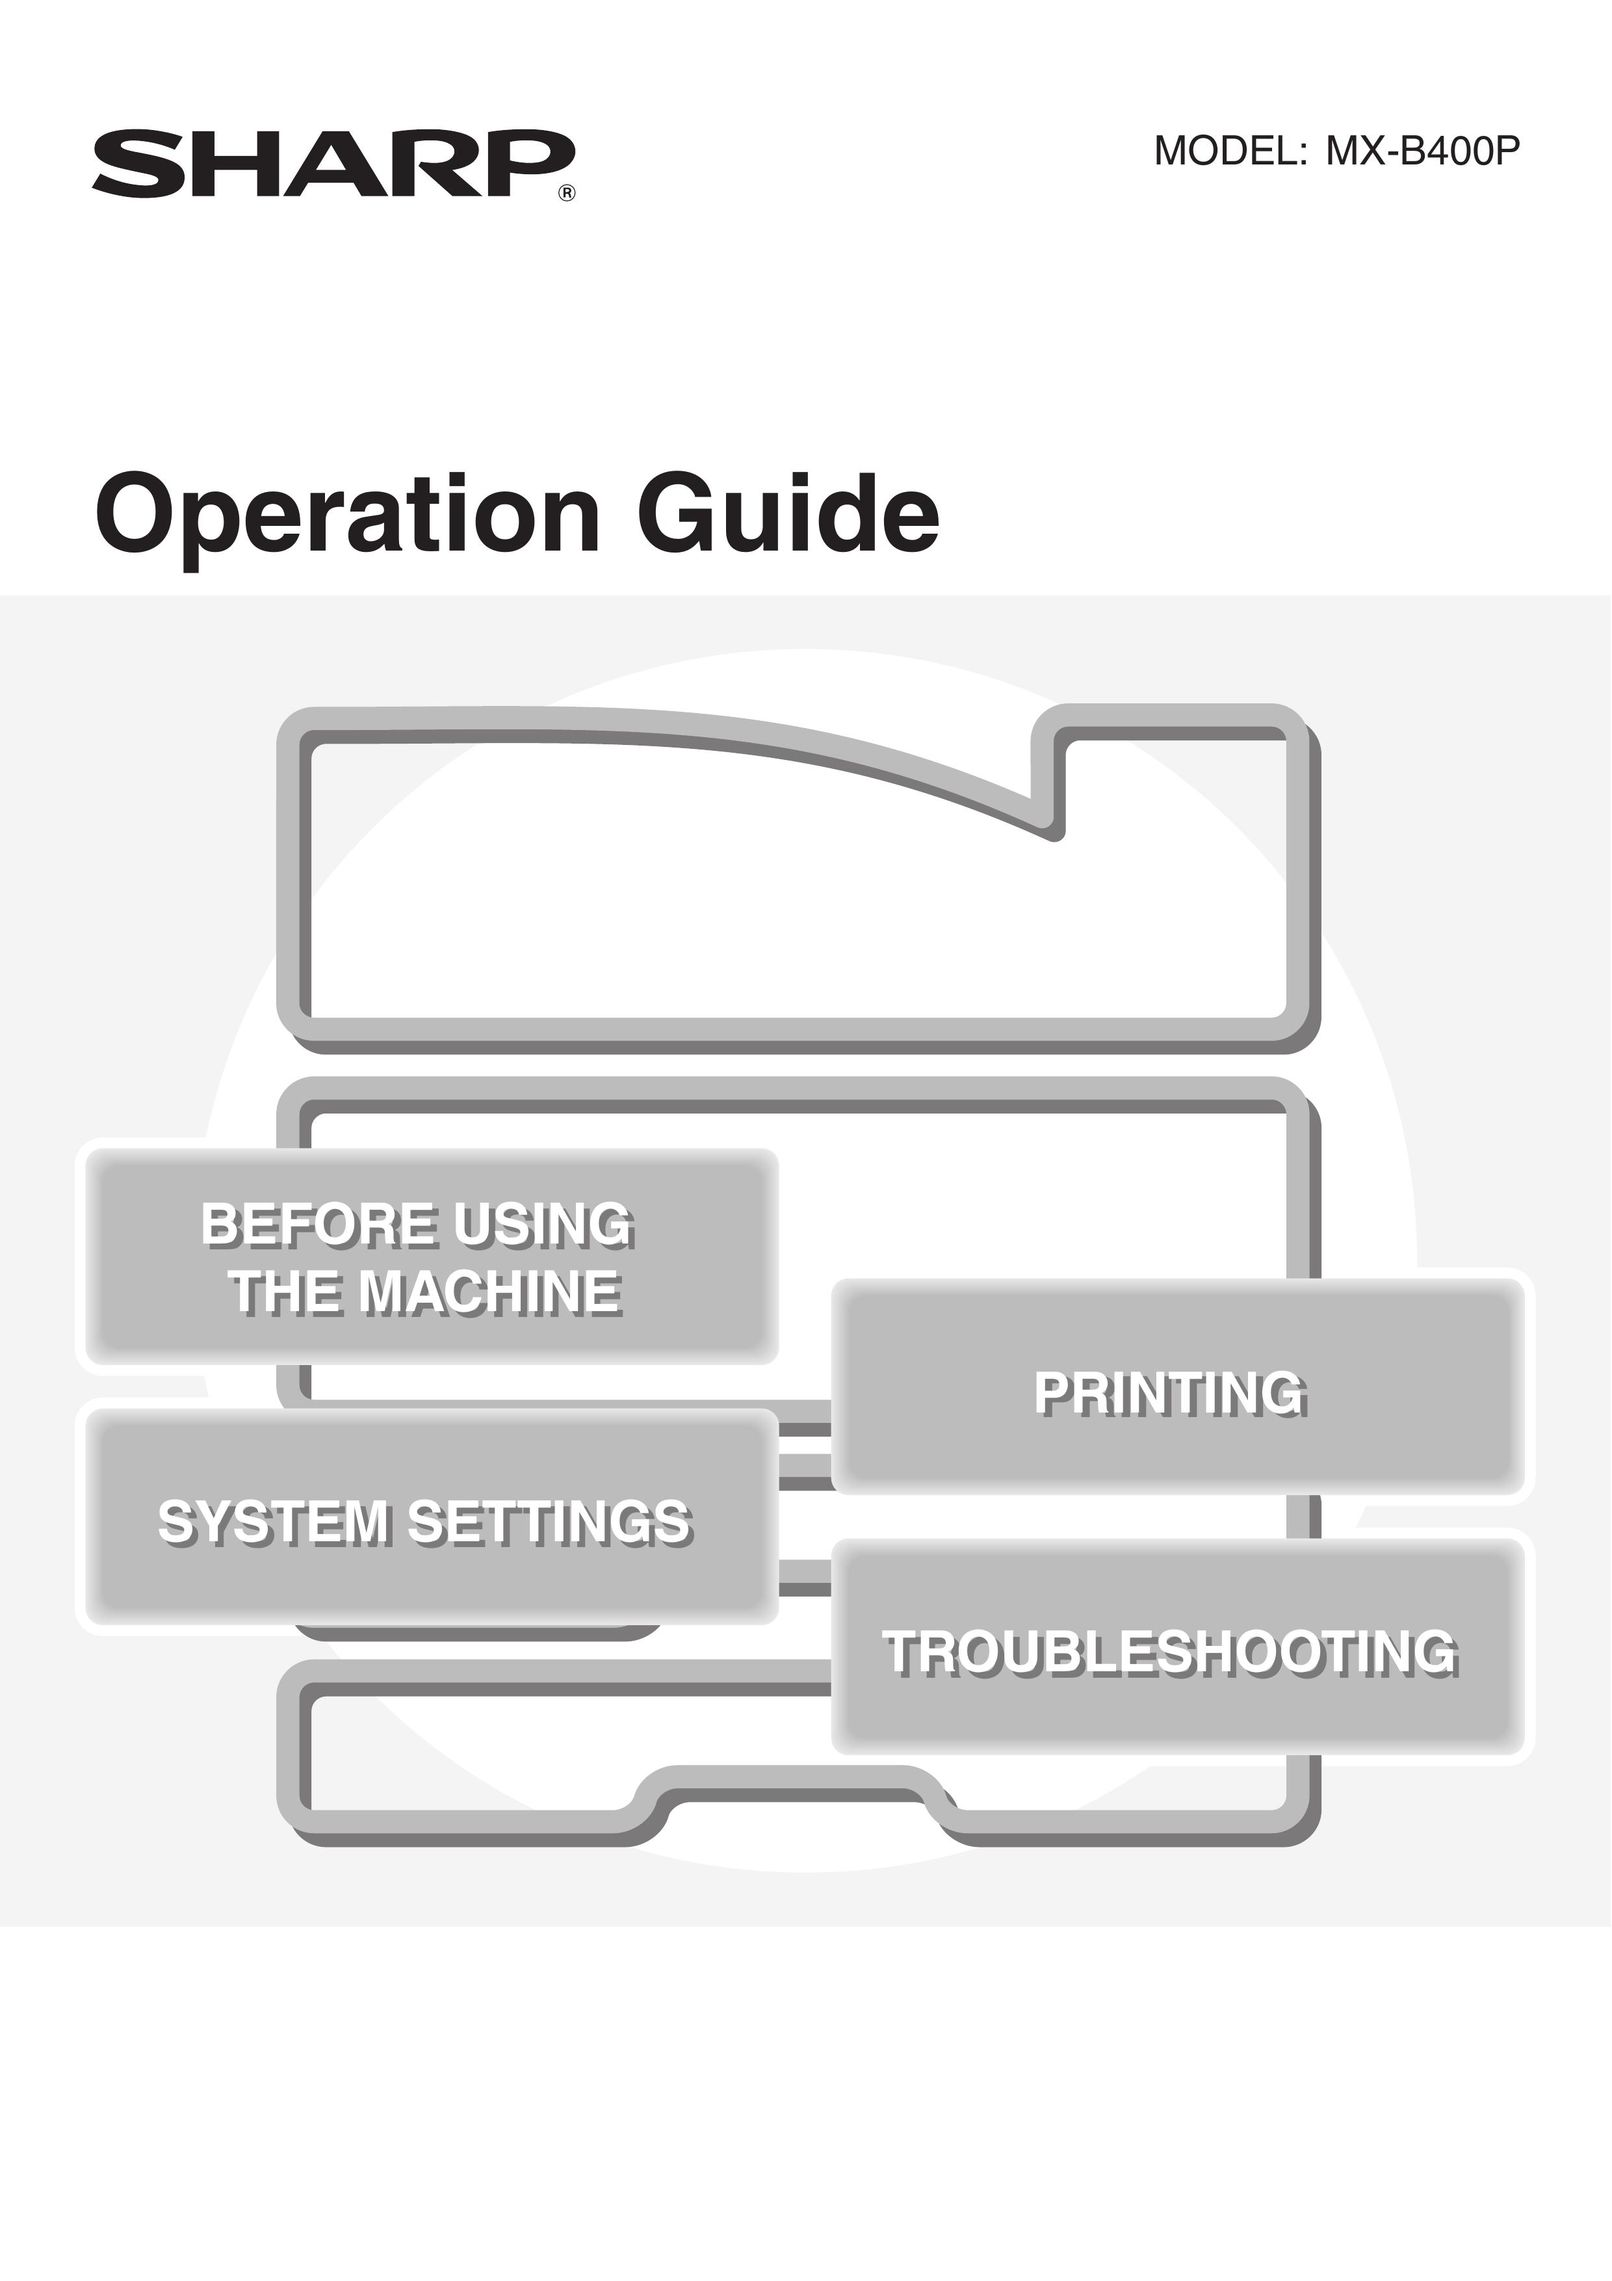 Sony MX-B400P Printer User Manual